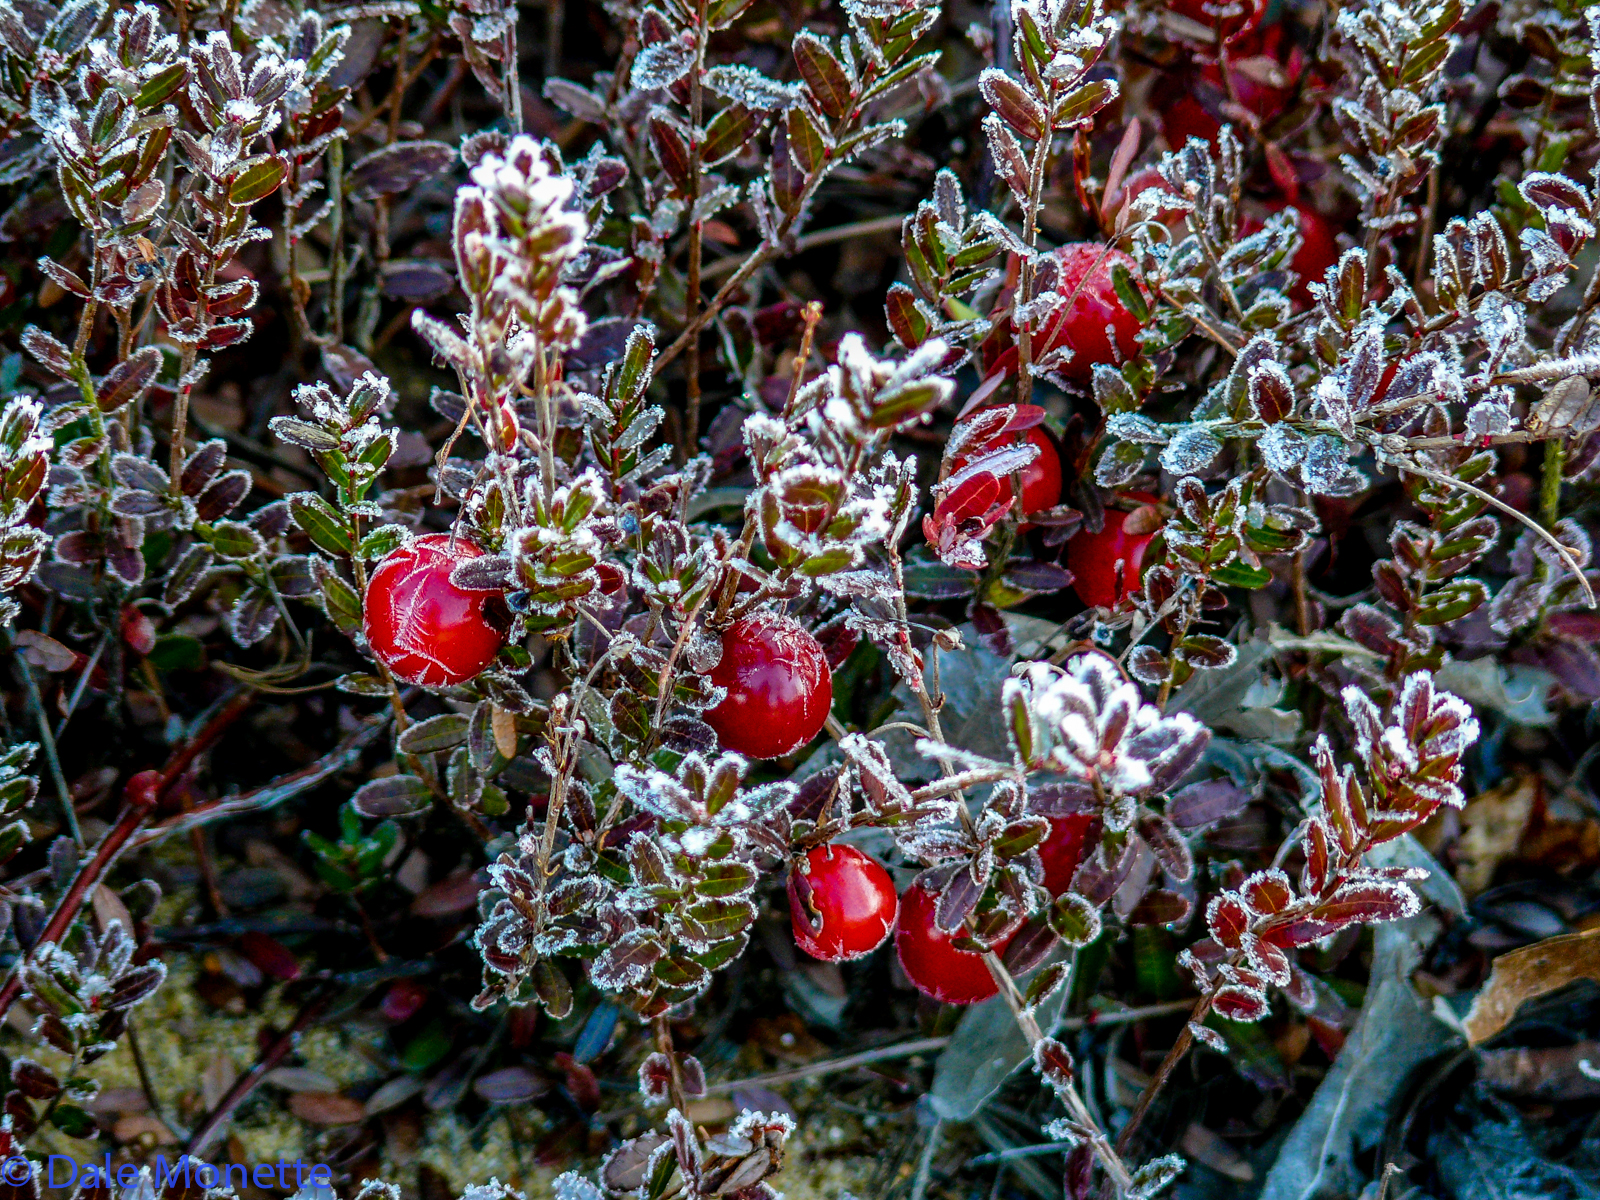 Wild cranberrys